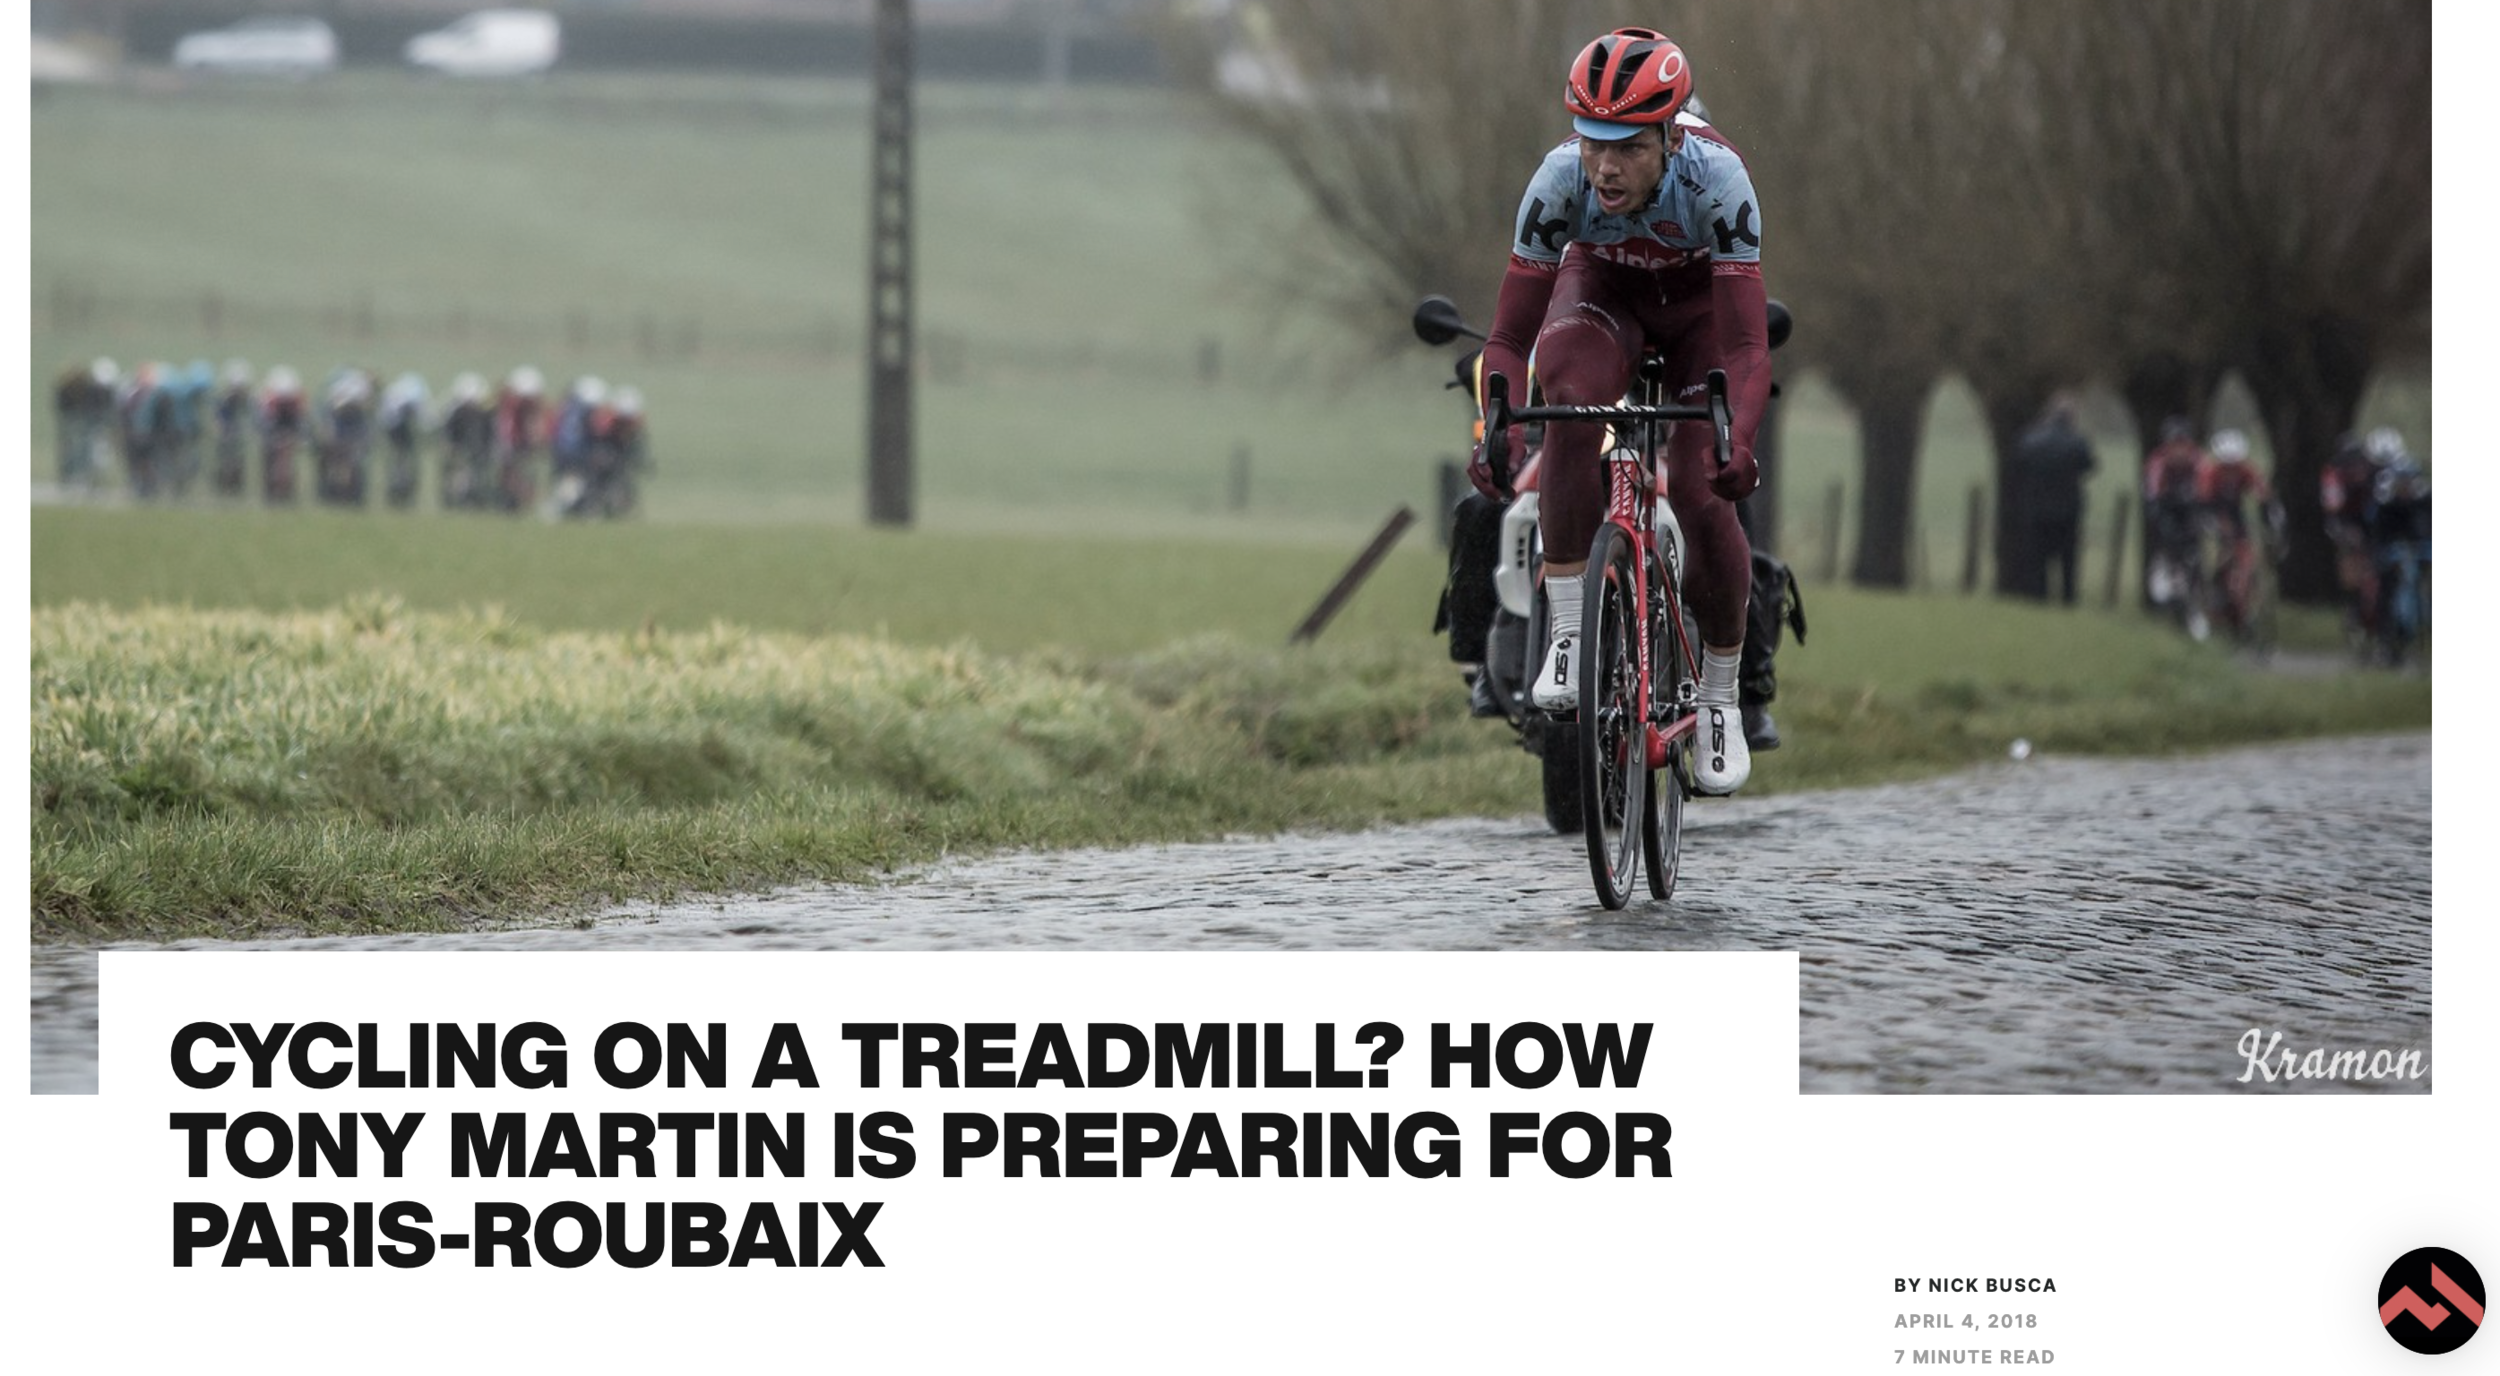 CYCLING ON A TREADMILL? HOW TONY MARTIN IS PREPARING FOR PARIS-ROUBAIX